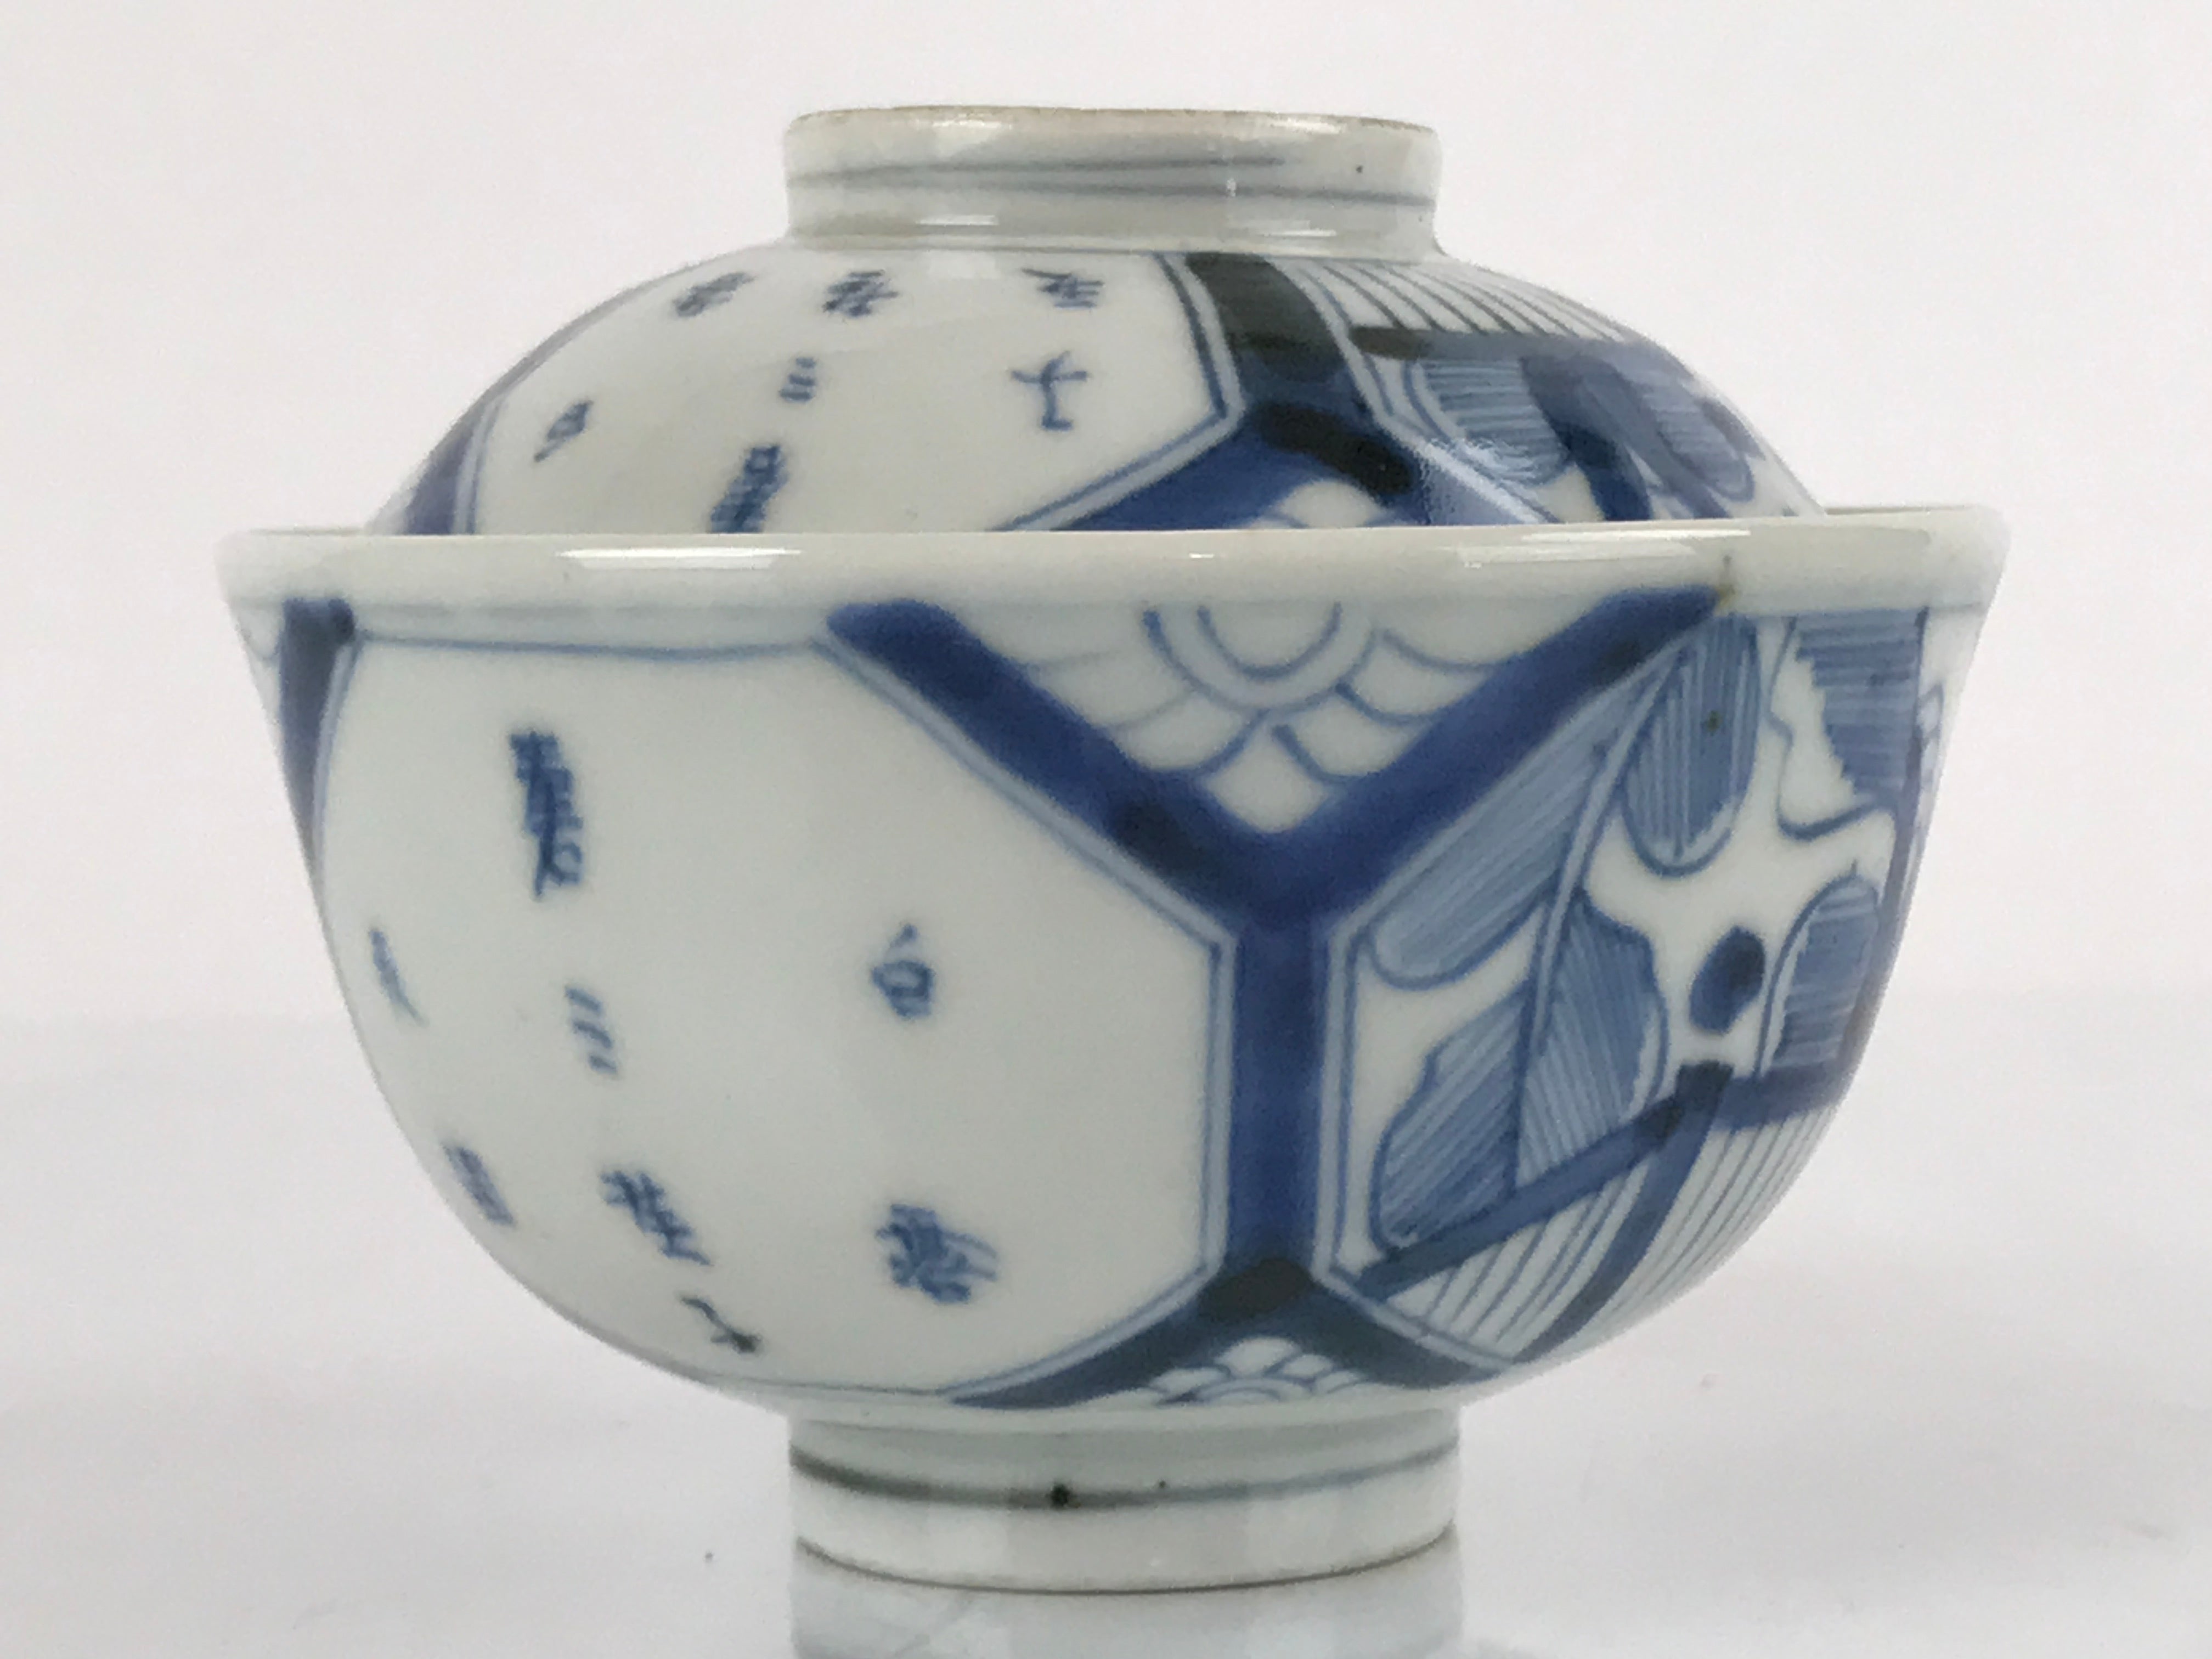 Japanese Porcelain Sometsuke Lidded Soup Bowl Vtg Floral Kanji Blue White PY723